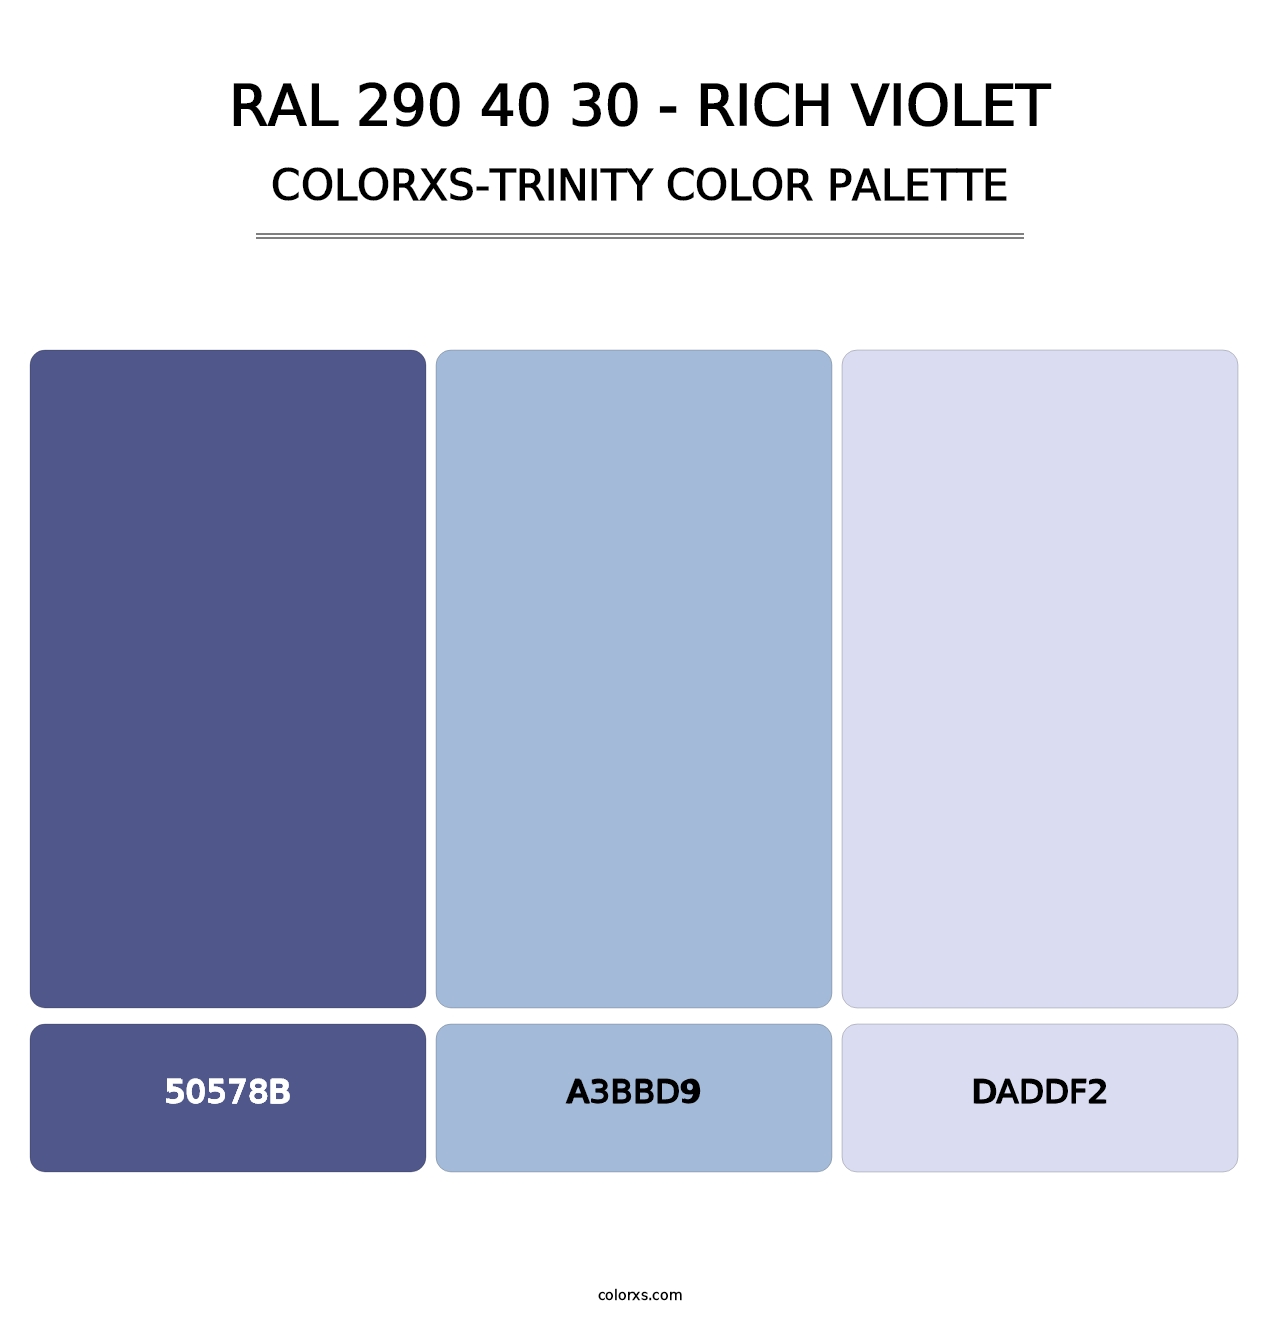 RAL 290 40 30 - Rich Violet - Colorxs Trinity Palette